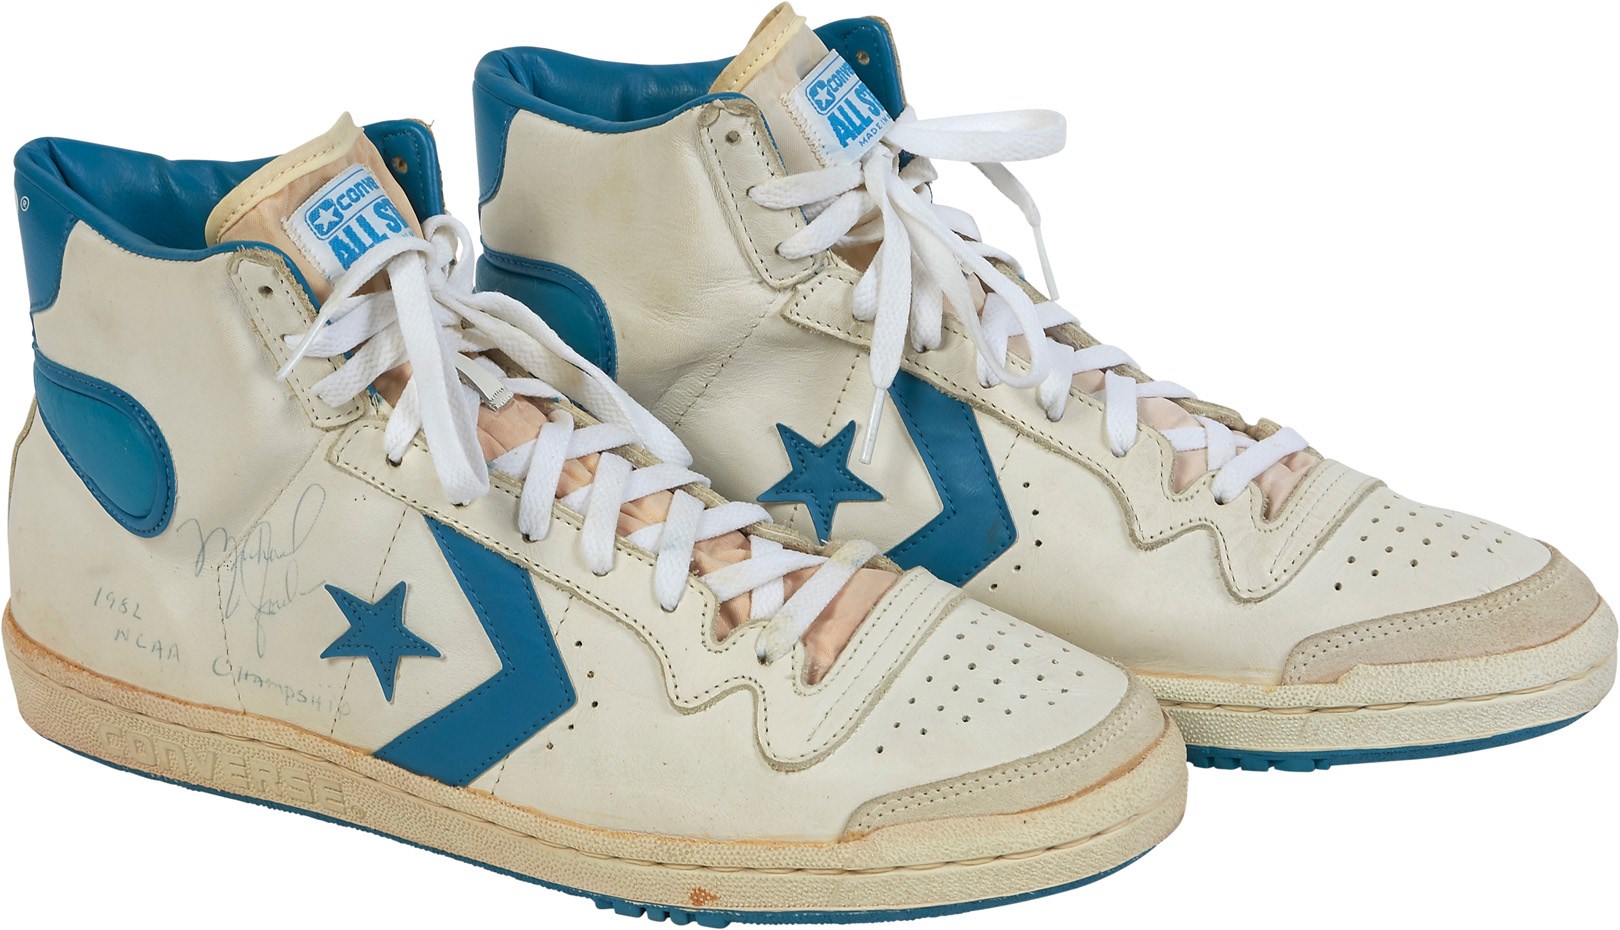 Michael Jordan Game Worn College Shoes at Auction to Benefit Carolina  Basketball